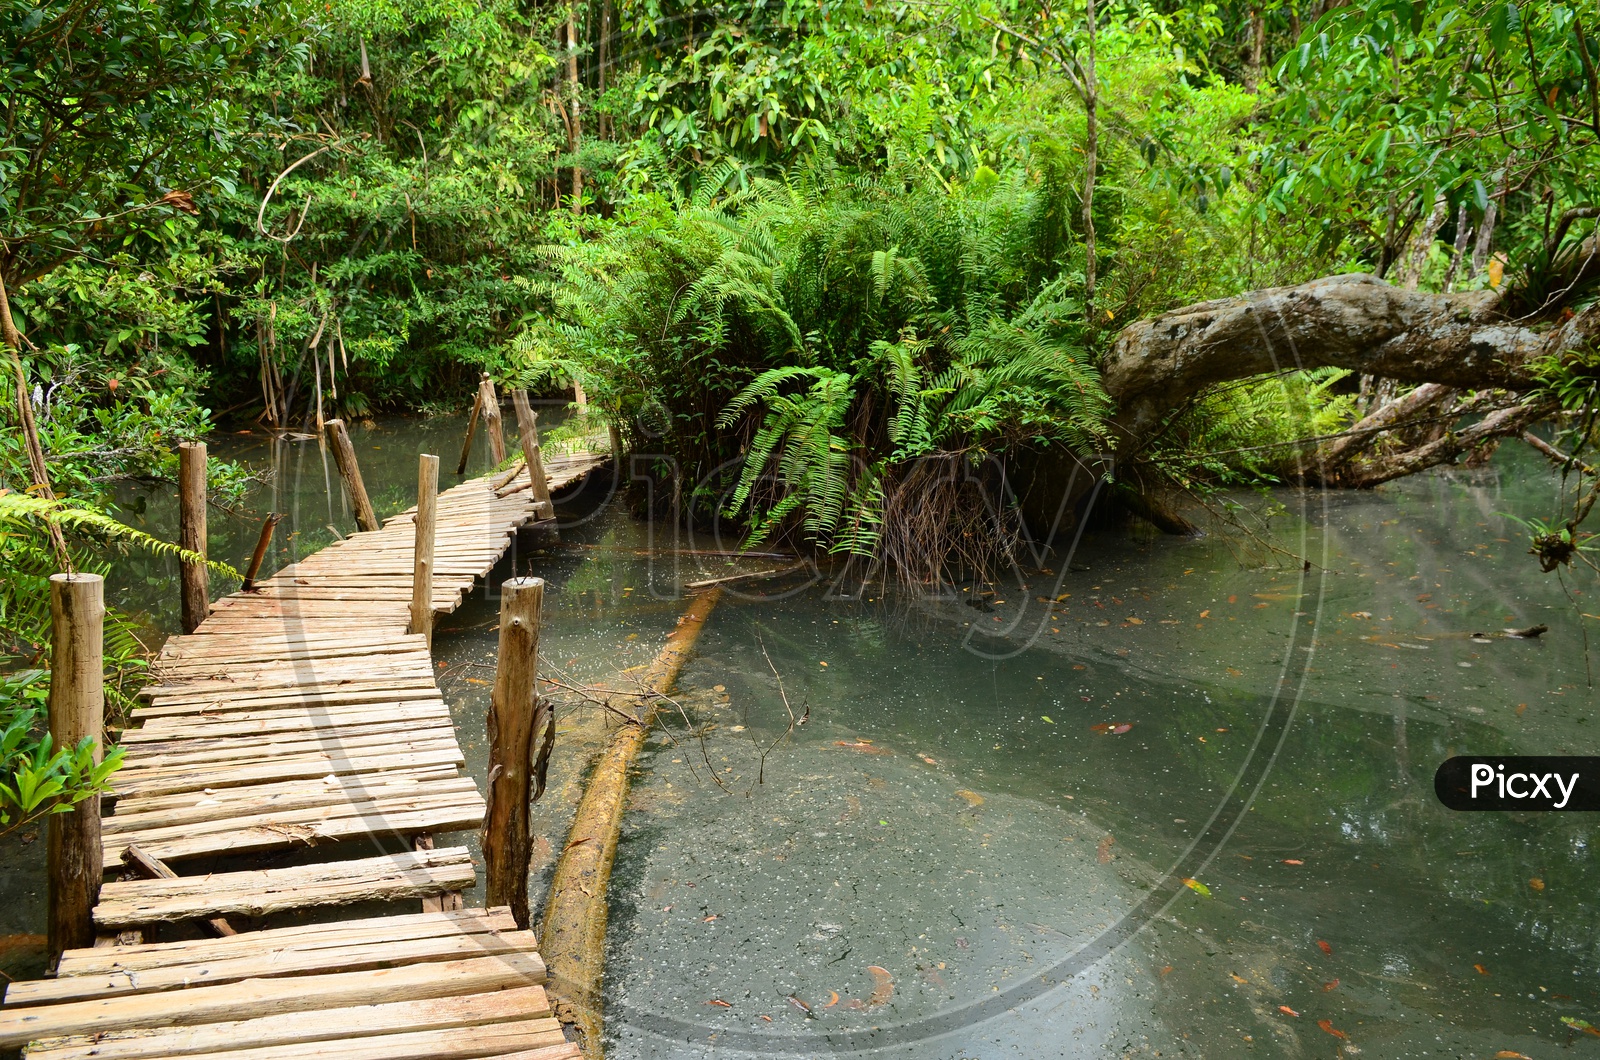 A Footwalk along the Mangrove forest, Thailand